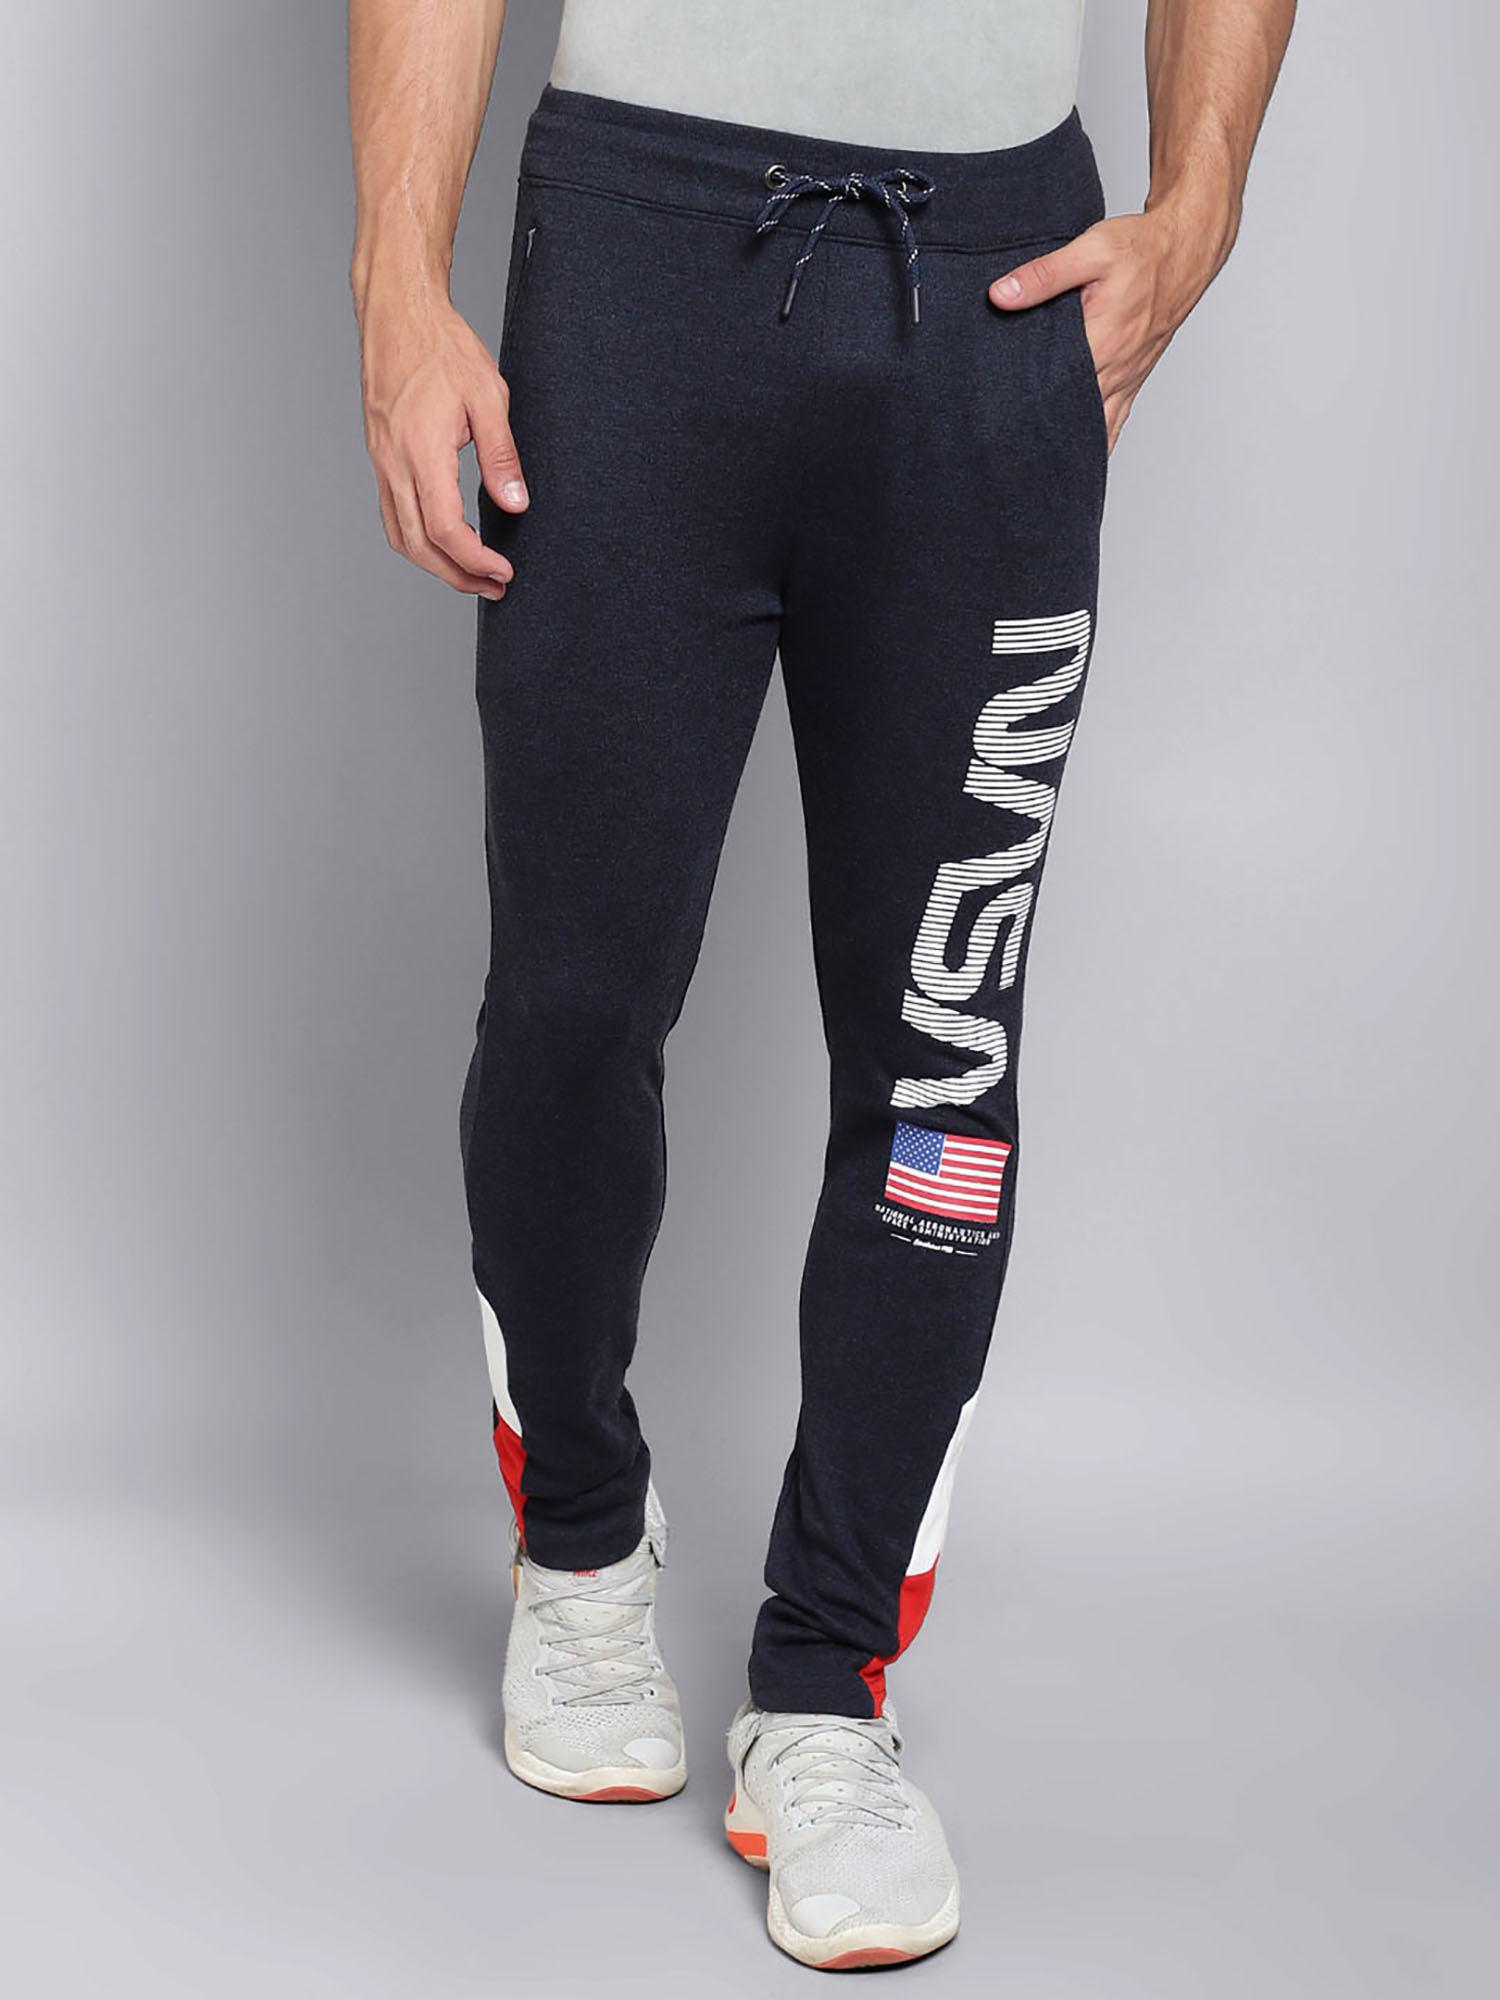 nasa featured navy blue jogger for men